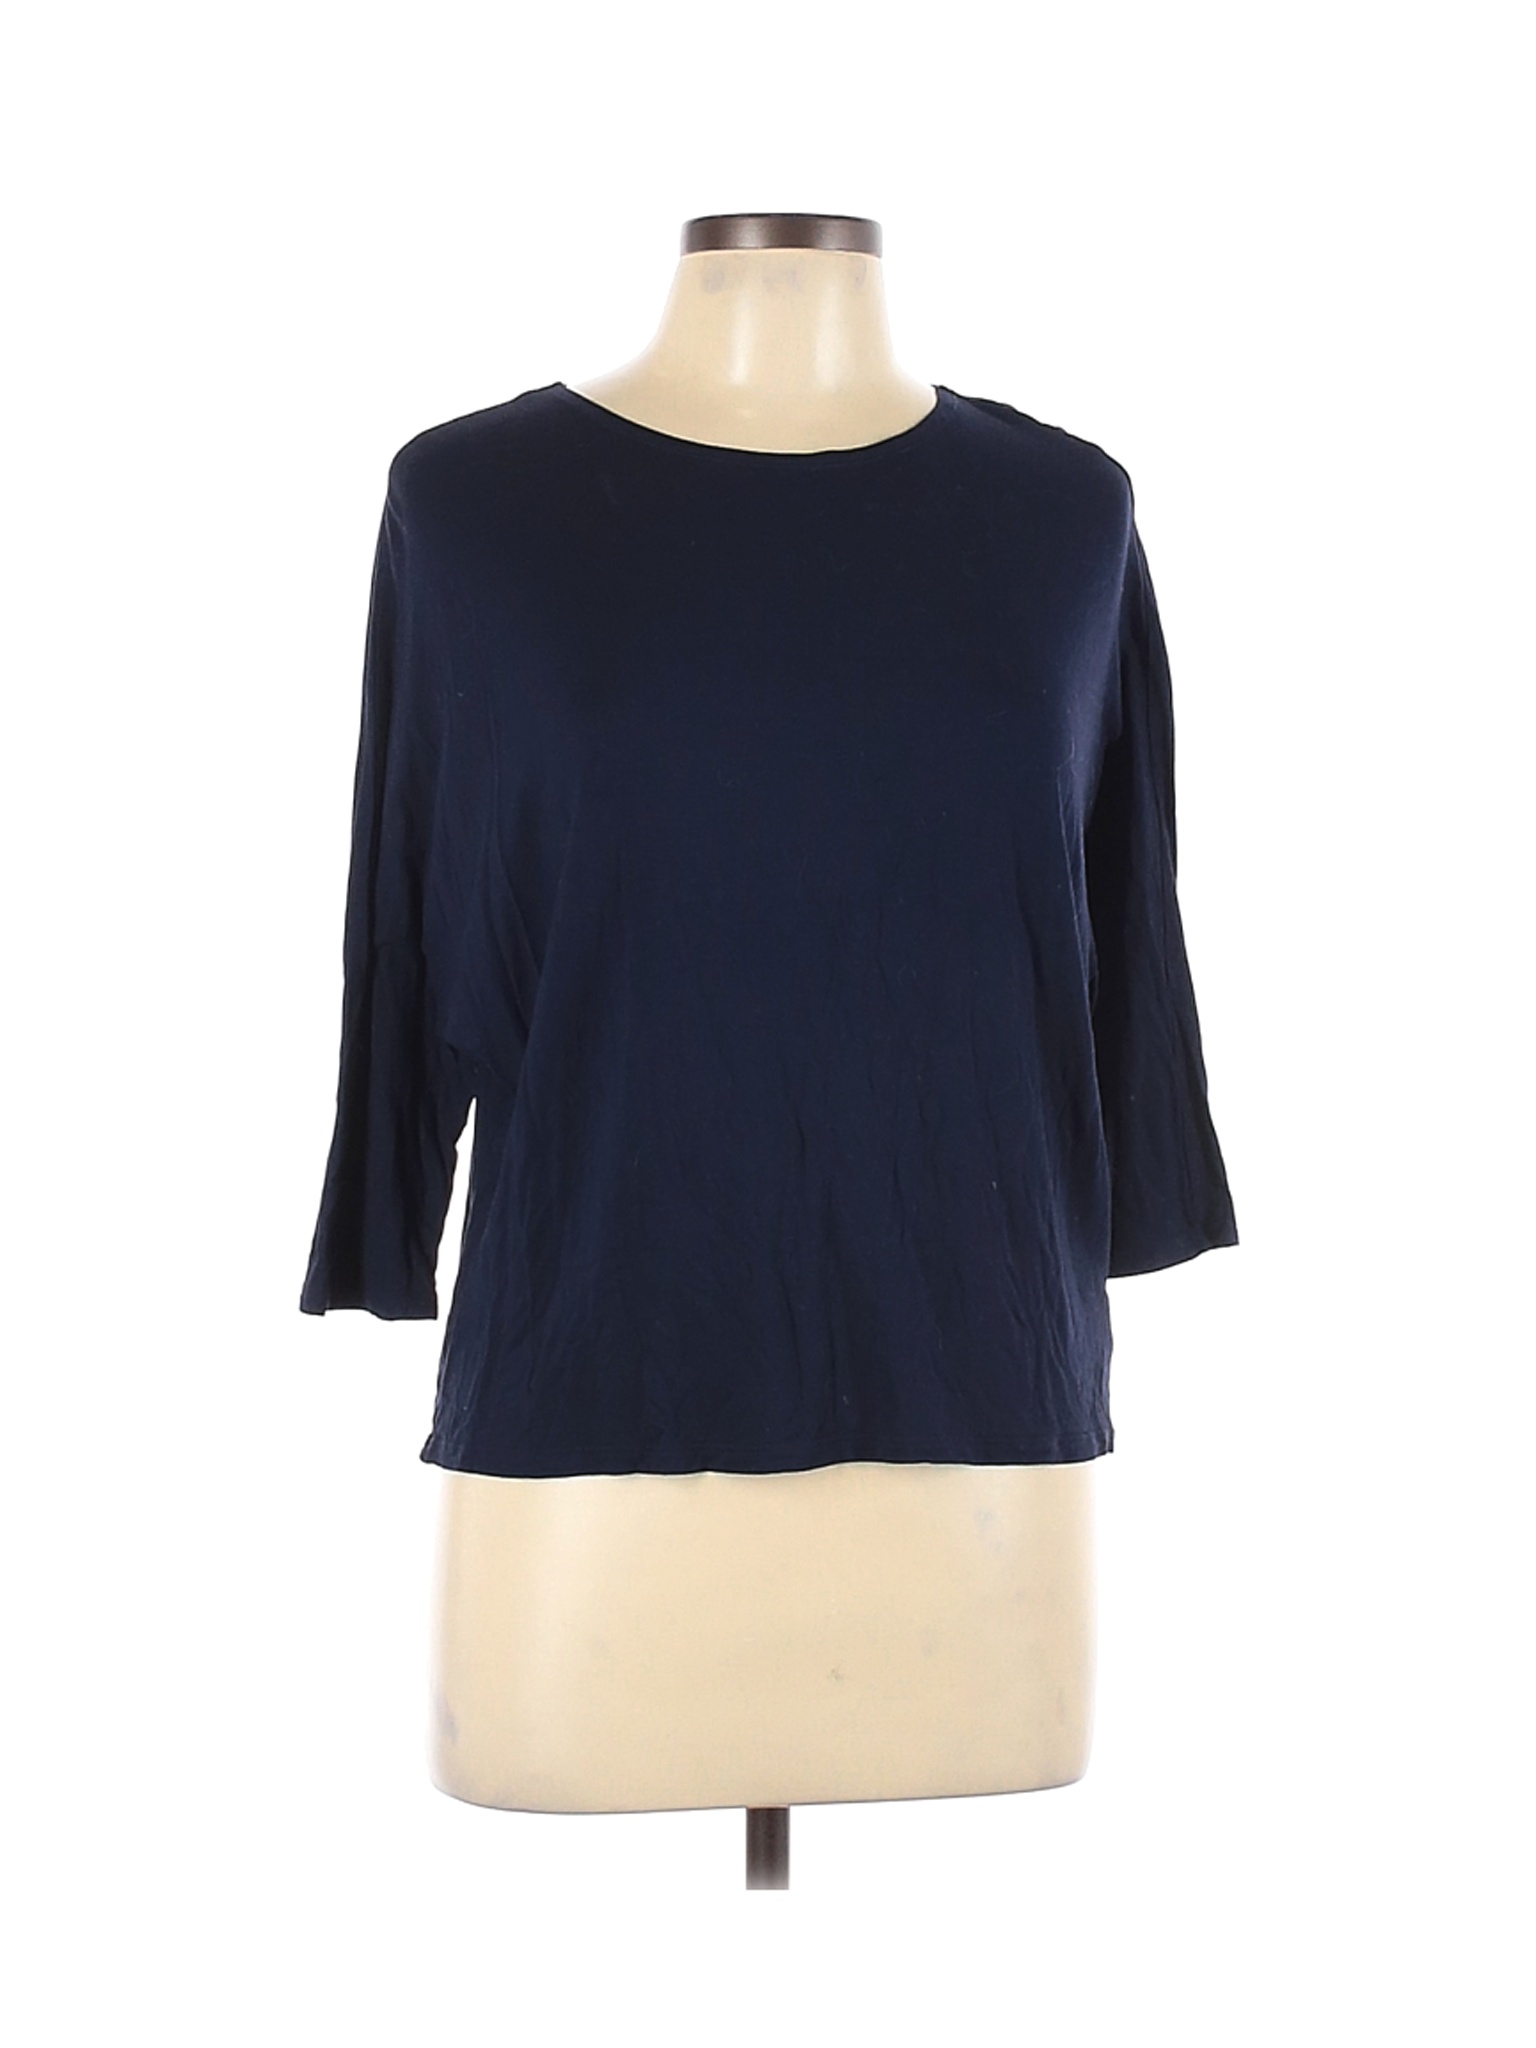 Gap Women Blue 3/4 Sleeve T-Shirt L | eBay